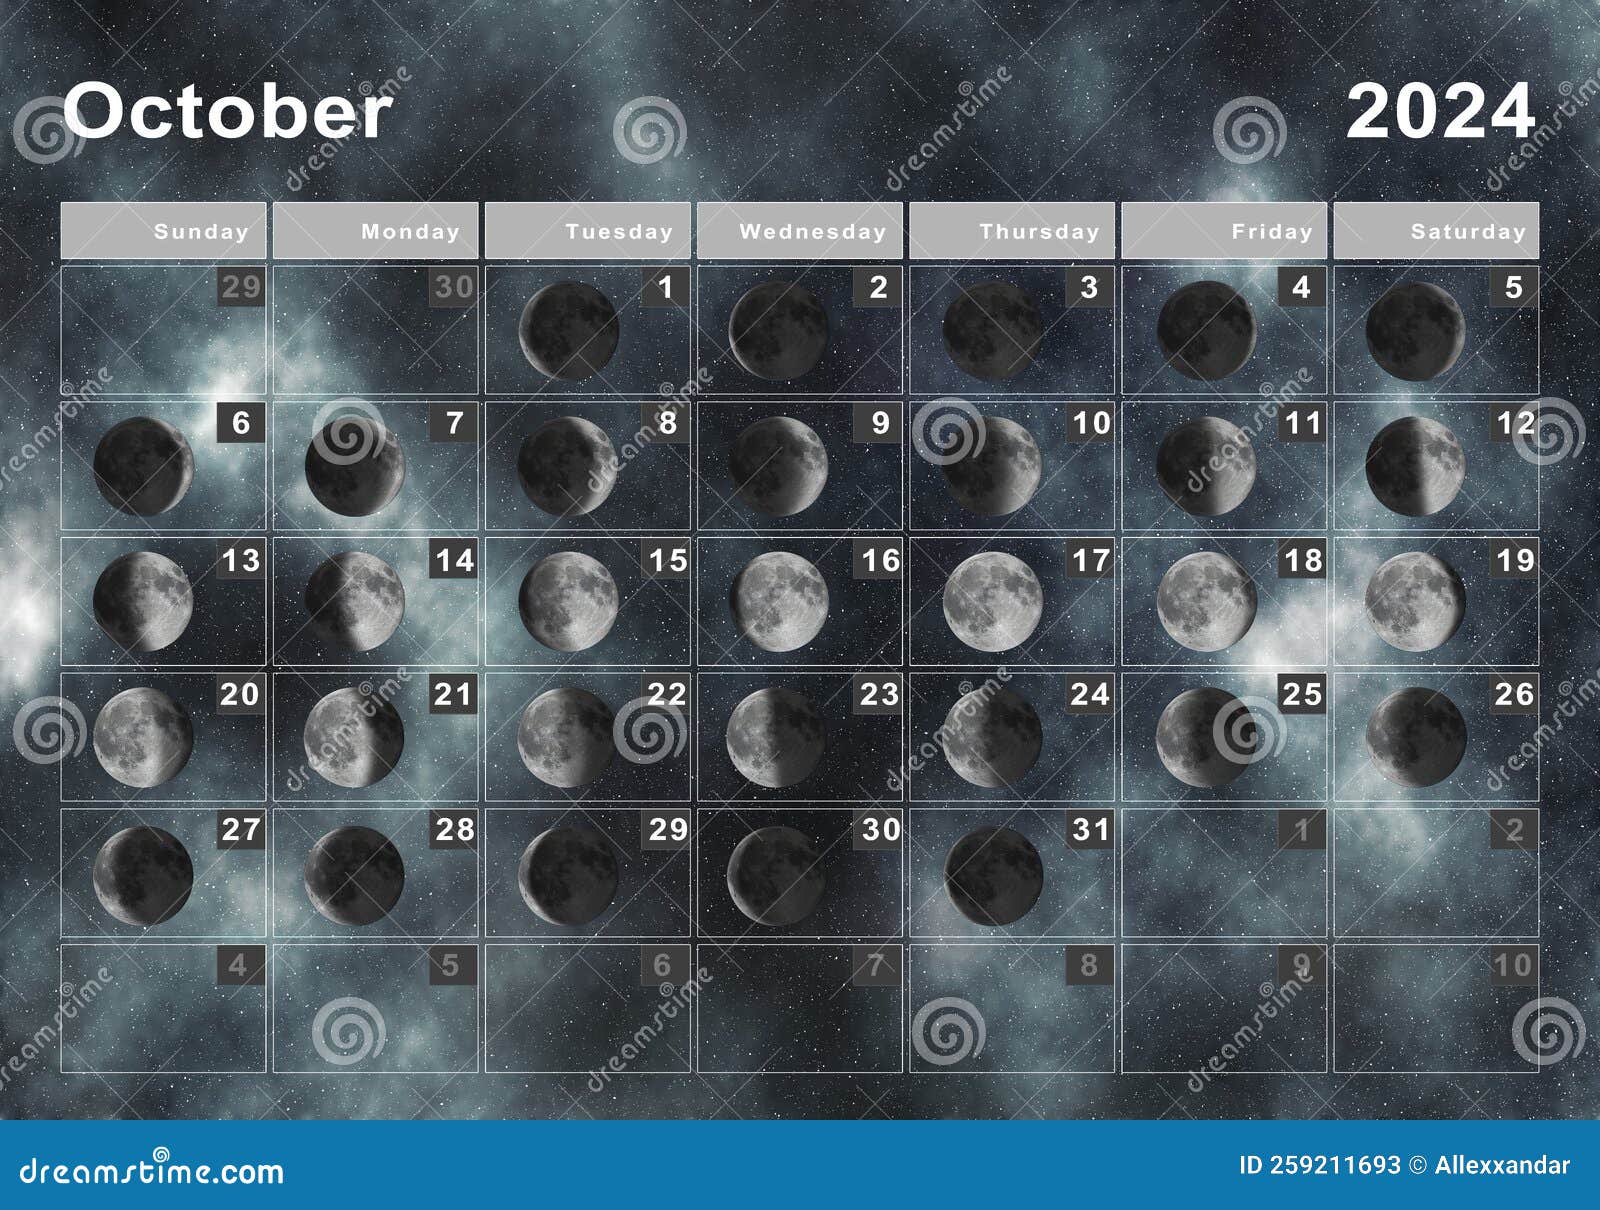 October 2024 Lunar Calendar, Moon Cycles Stock Illustration